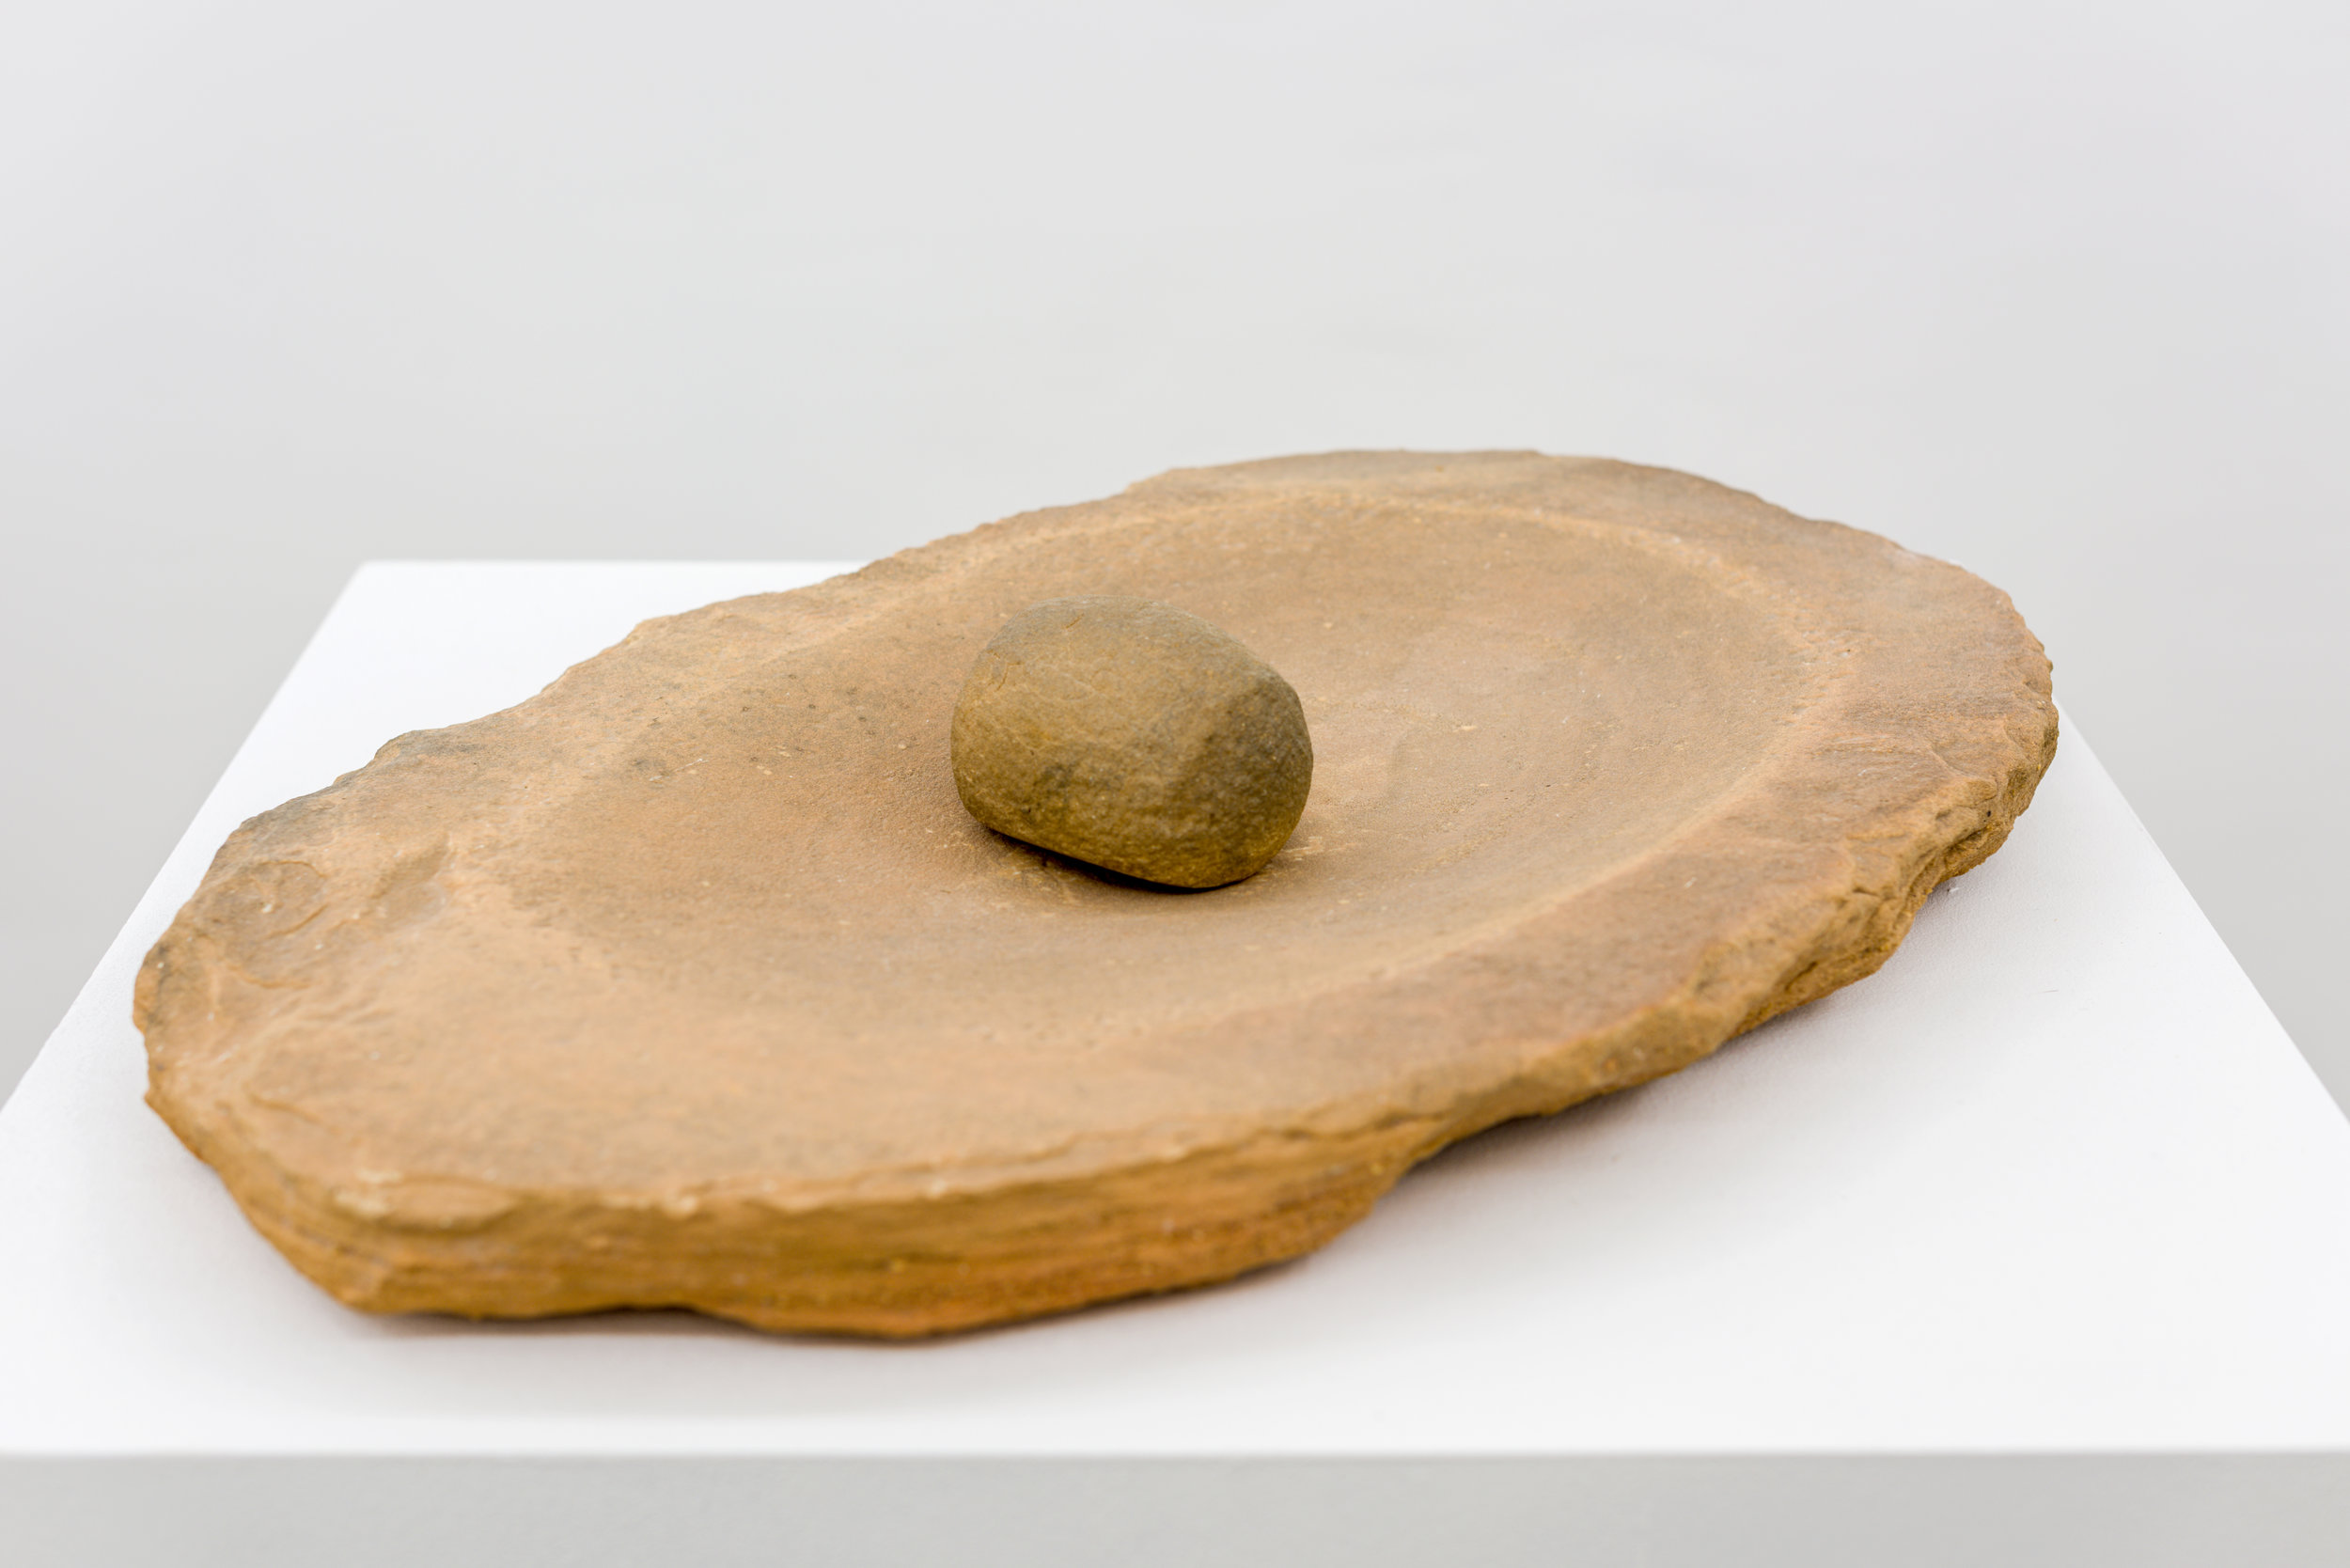   Neolithic Grinding Basin and Pestle ,&nbsp;8th – 7th Millennium B.C.E.,&nbsp;Sandstone,&nbsp;Bowl 62 cm x 40.5 cm / Stone 11 cm x 8 cm,&nbsp;Courtesy Rupert Wace Ancient Art, London 